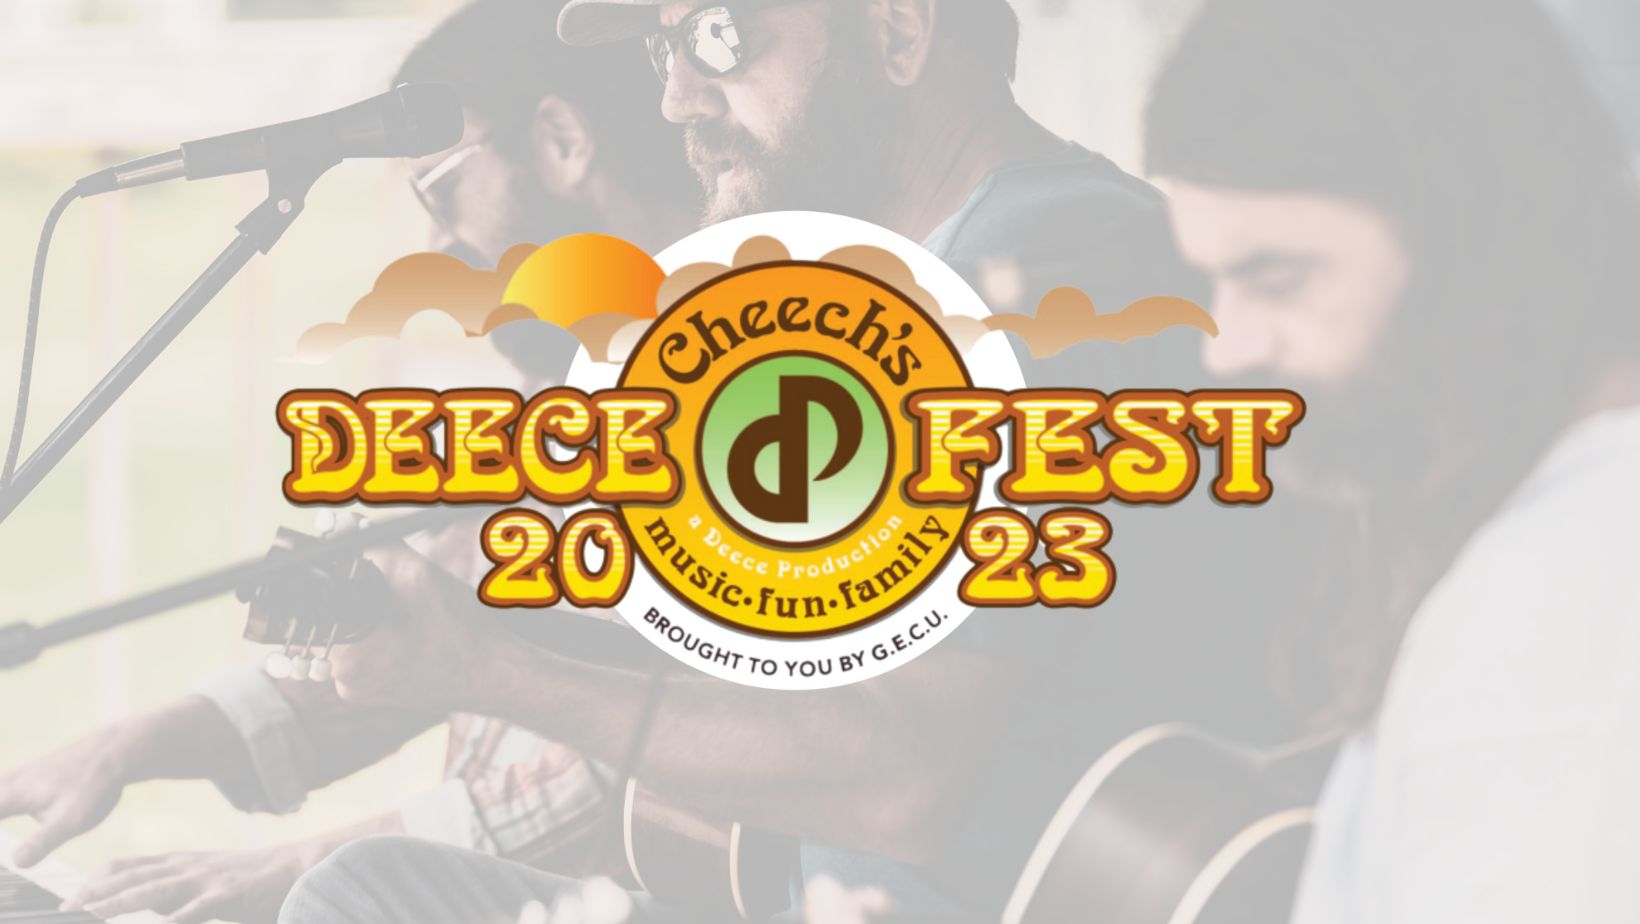 Cheech’s Deecefest Family Music Festival Announces Second Wave of Music Line-Up!